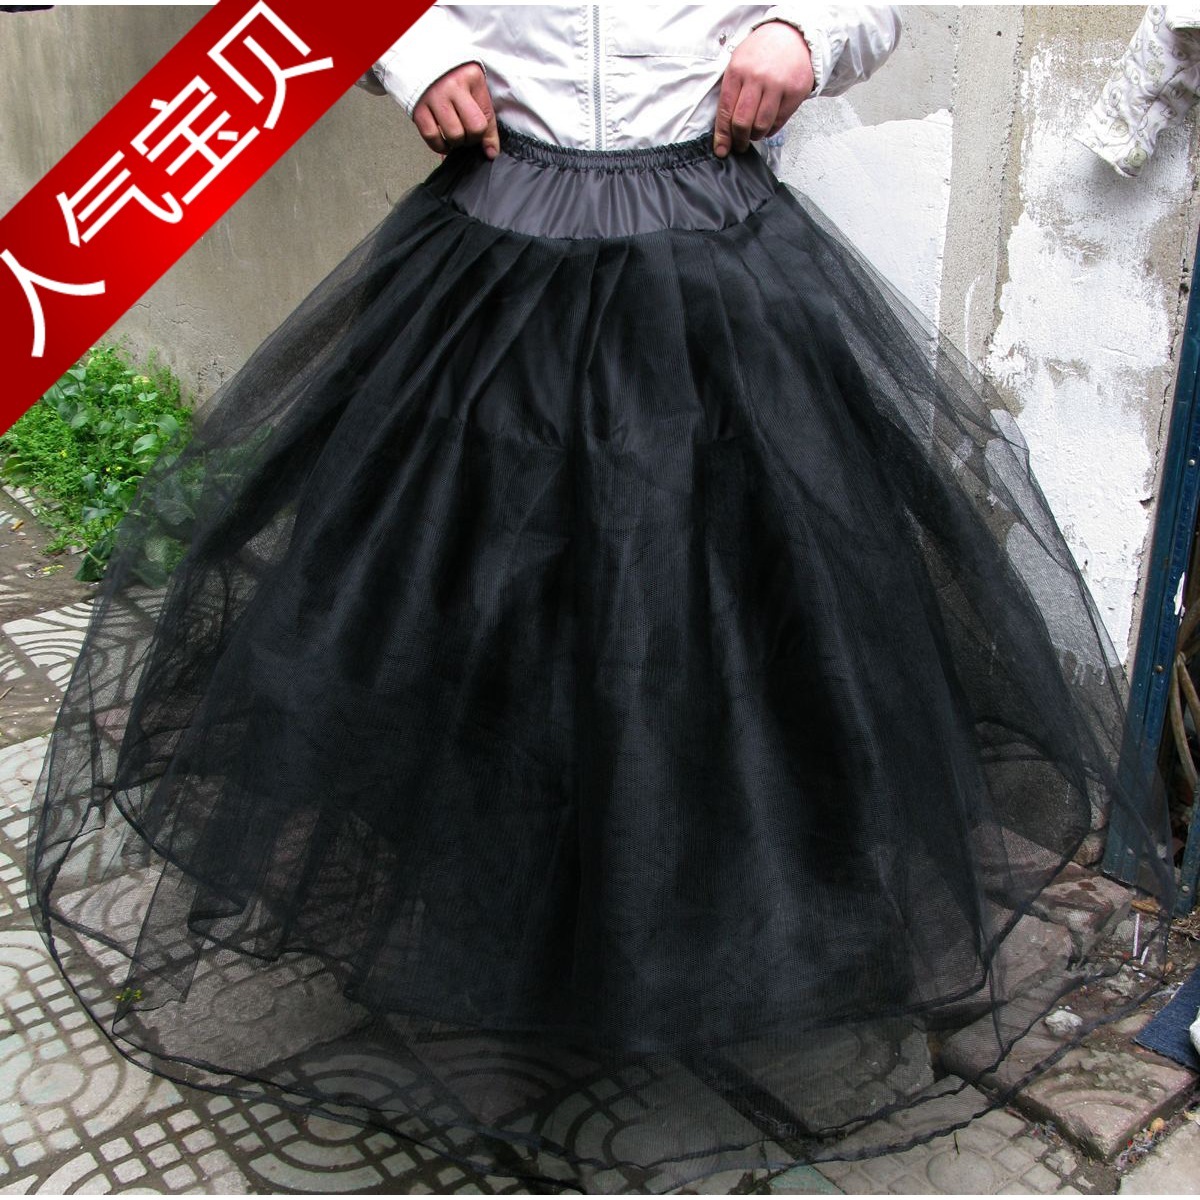 Boneless skirt stretcher w04 black evening dress table costume sexy clothes lining wireless hard gauze